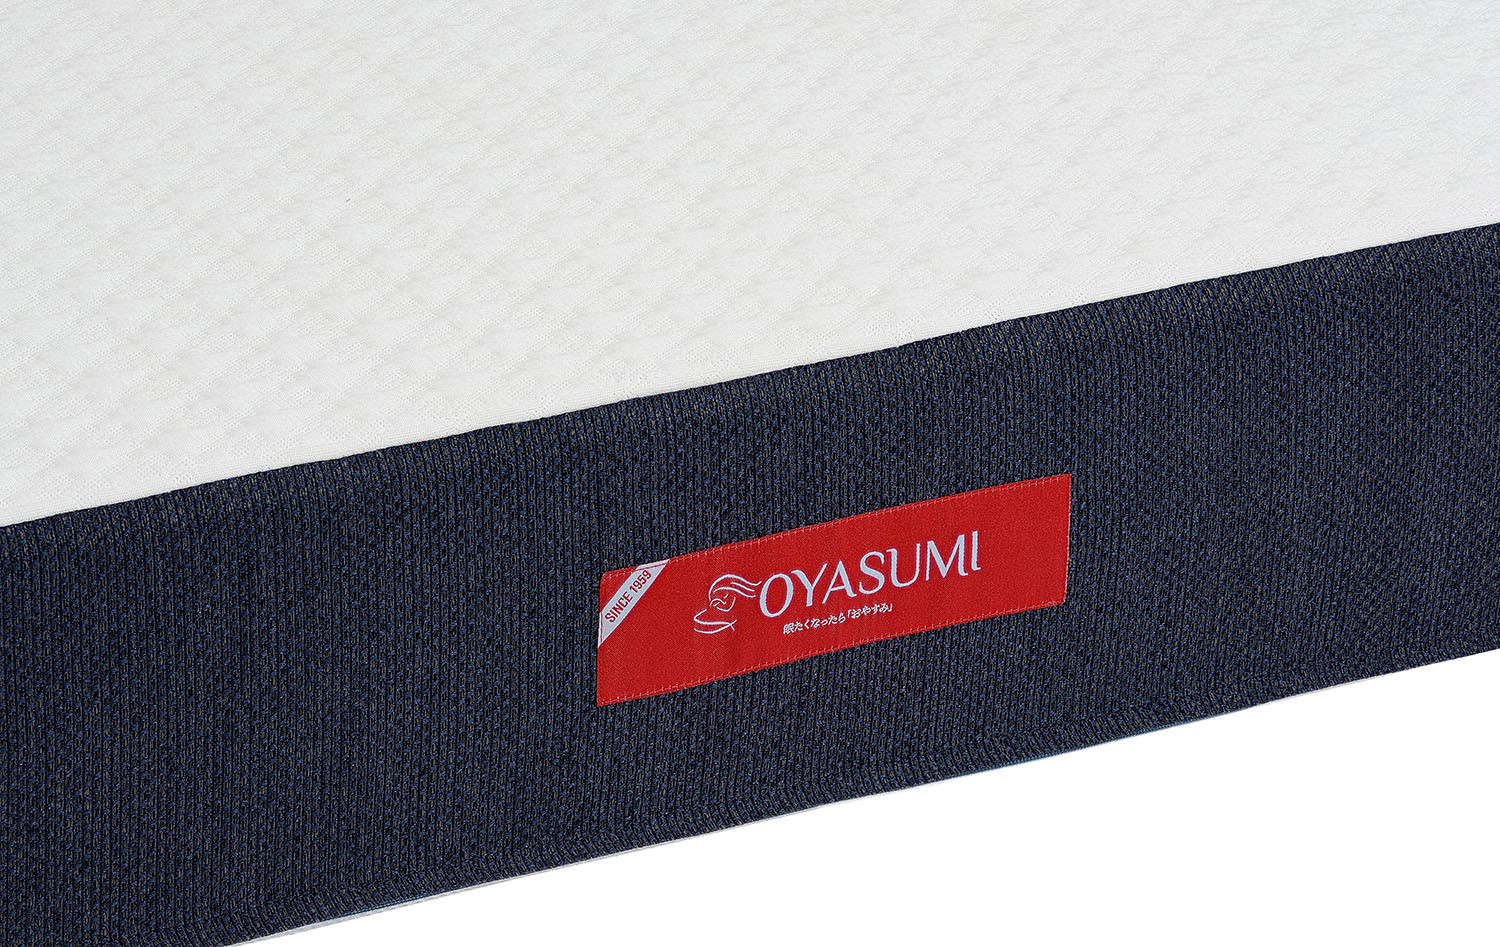 Nệm Foam Nhật Bản Oyasumi Premium gấp 3